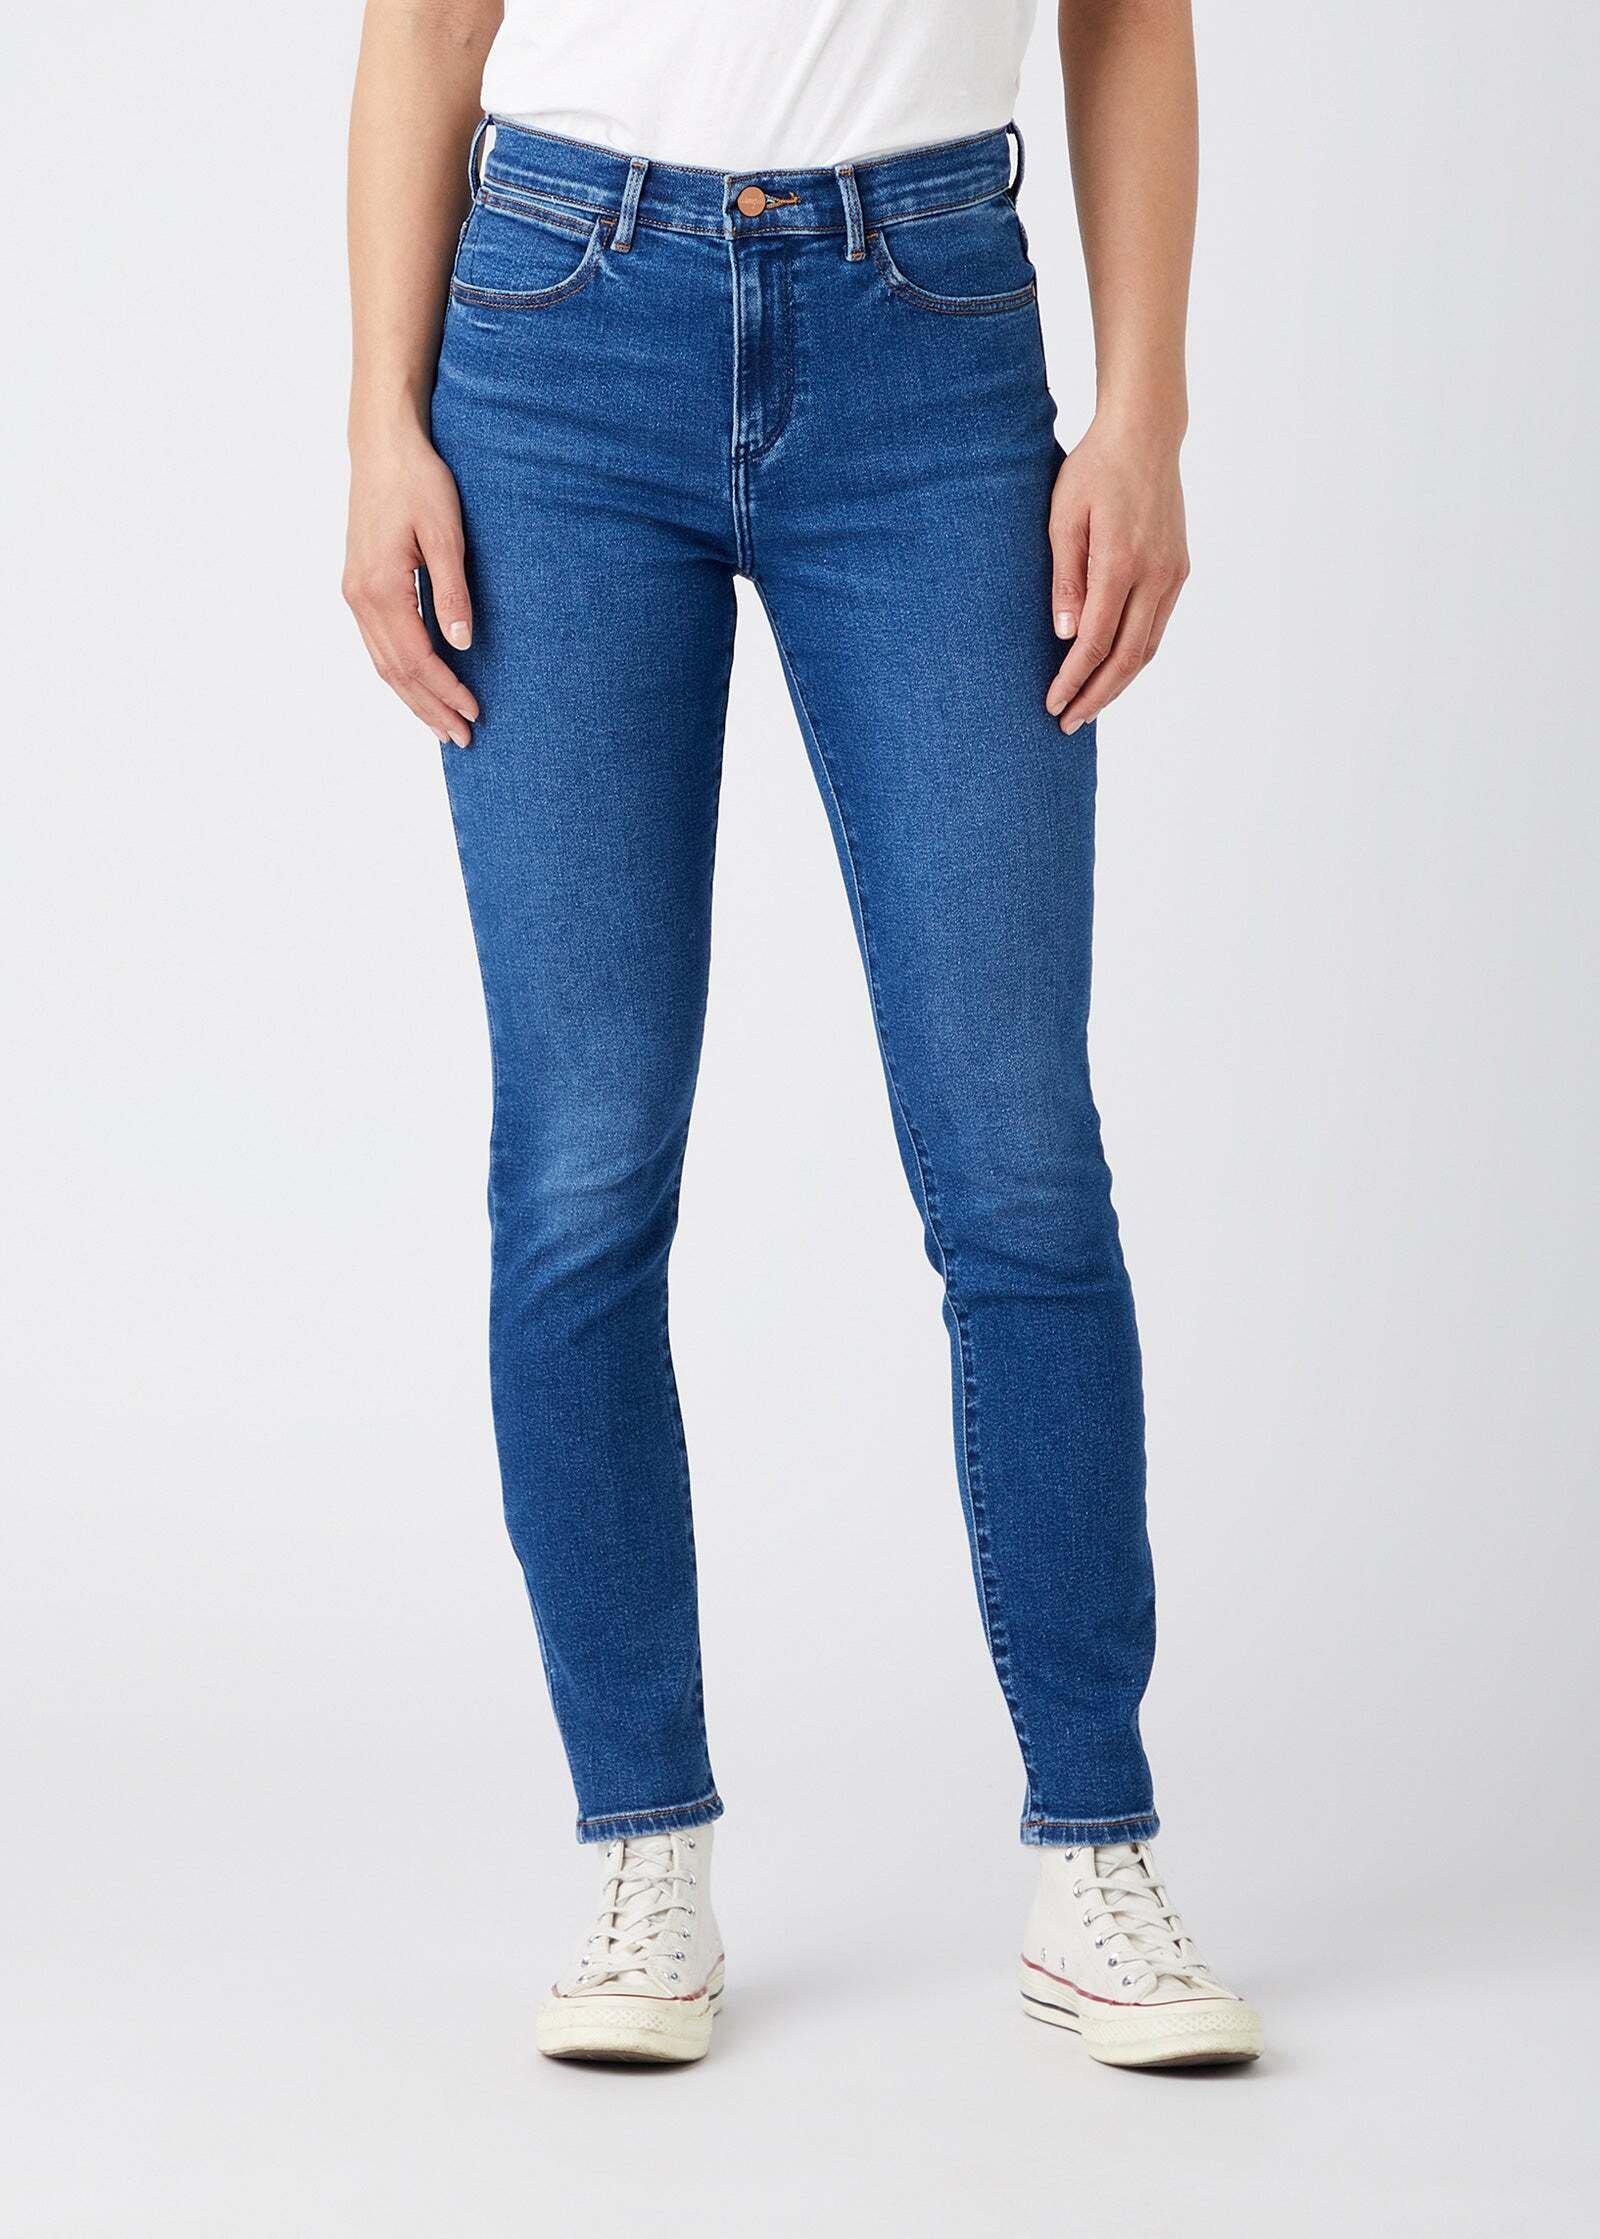 Jeans Skinny Fit High Rise Damen Blau Denim L32/W25 von Wrangler